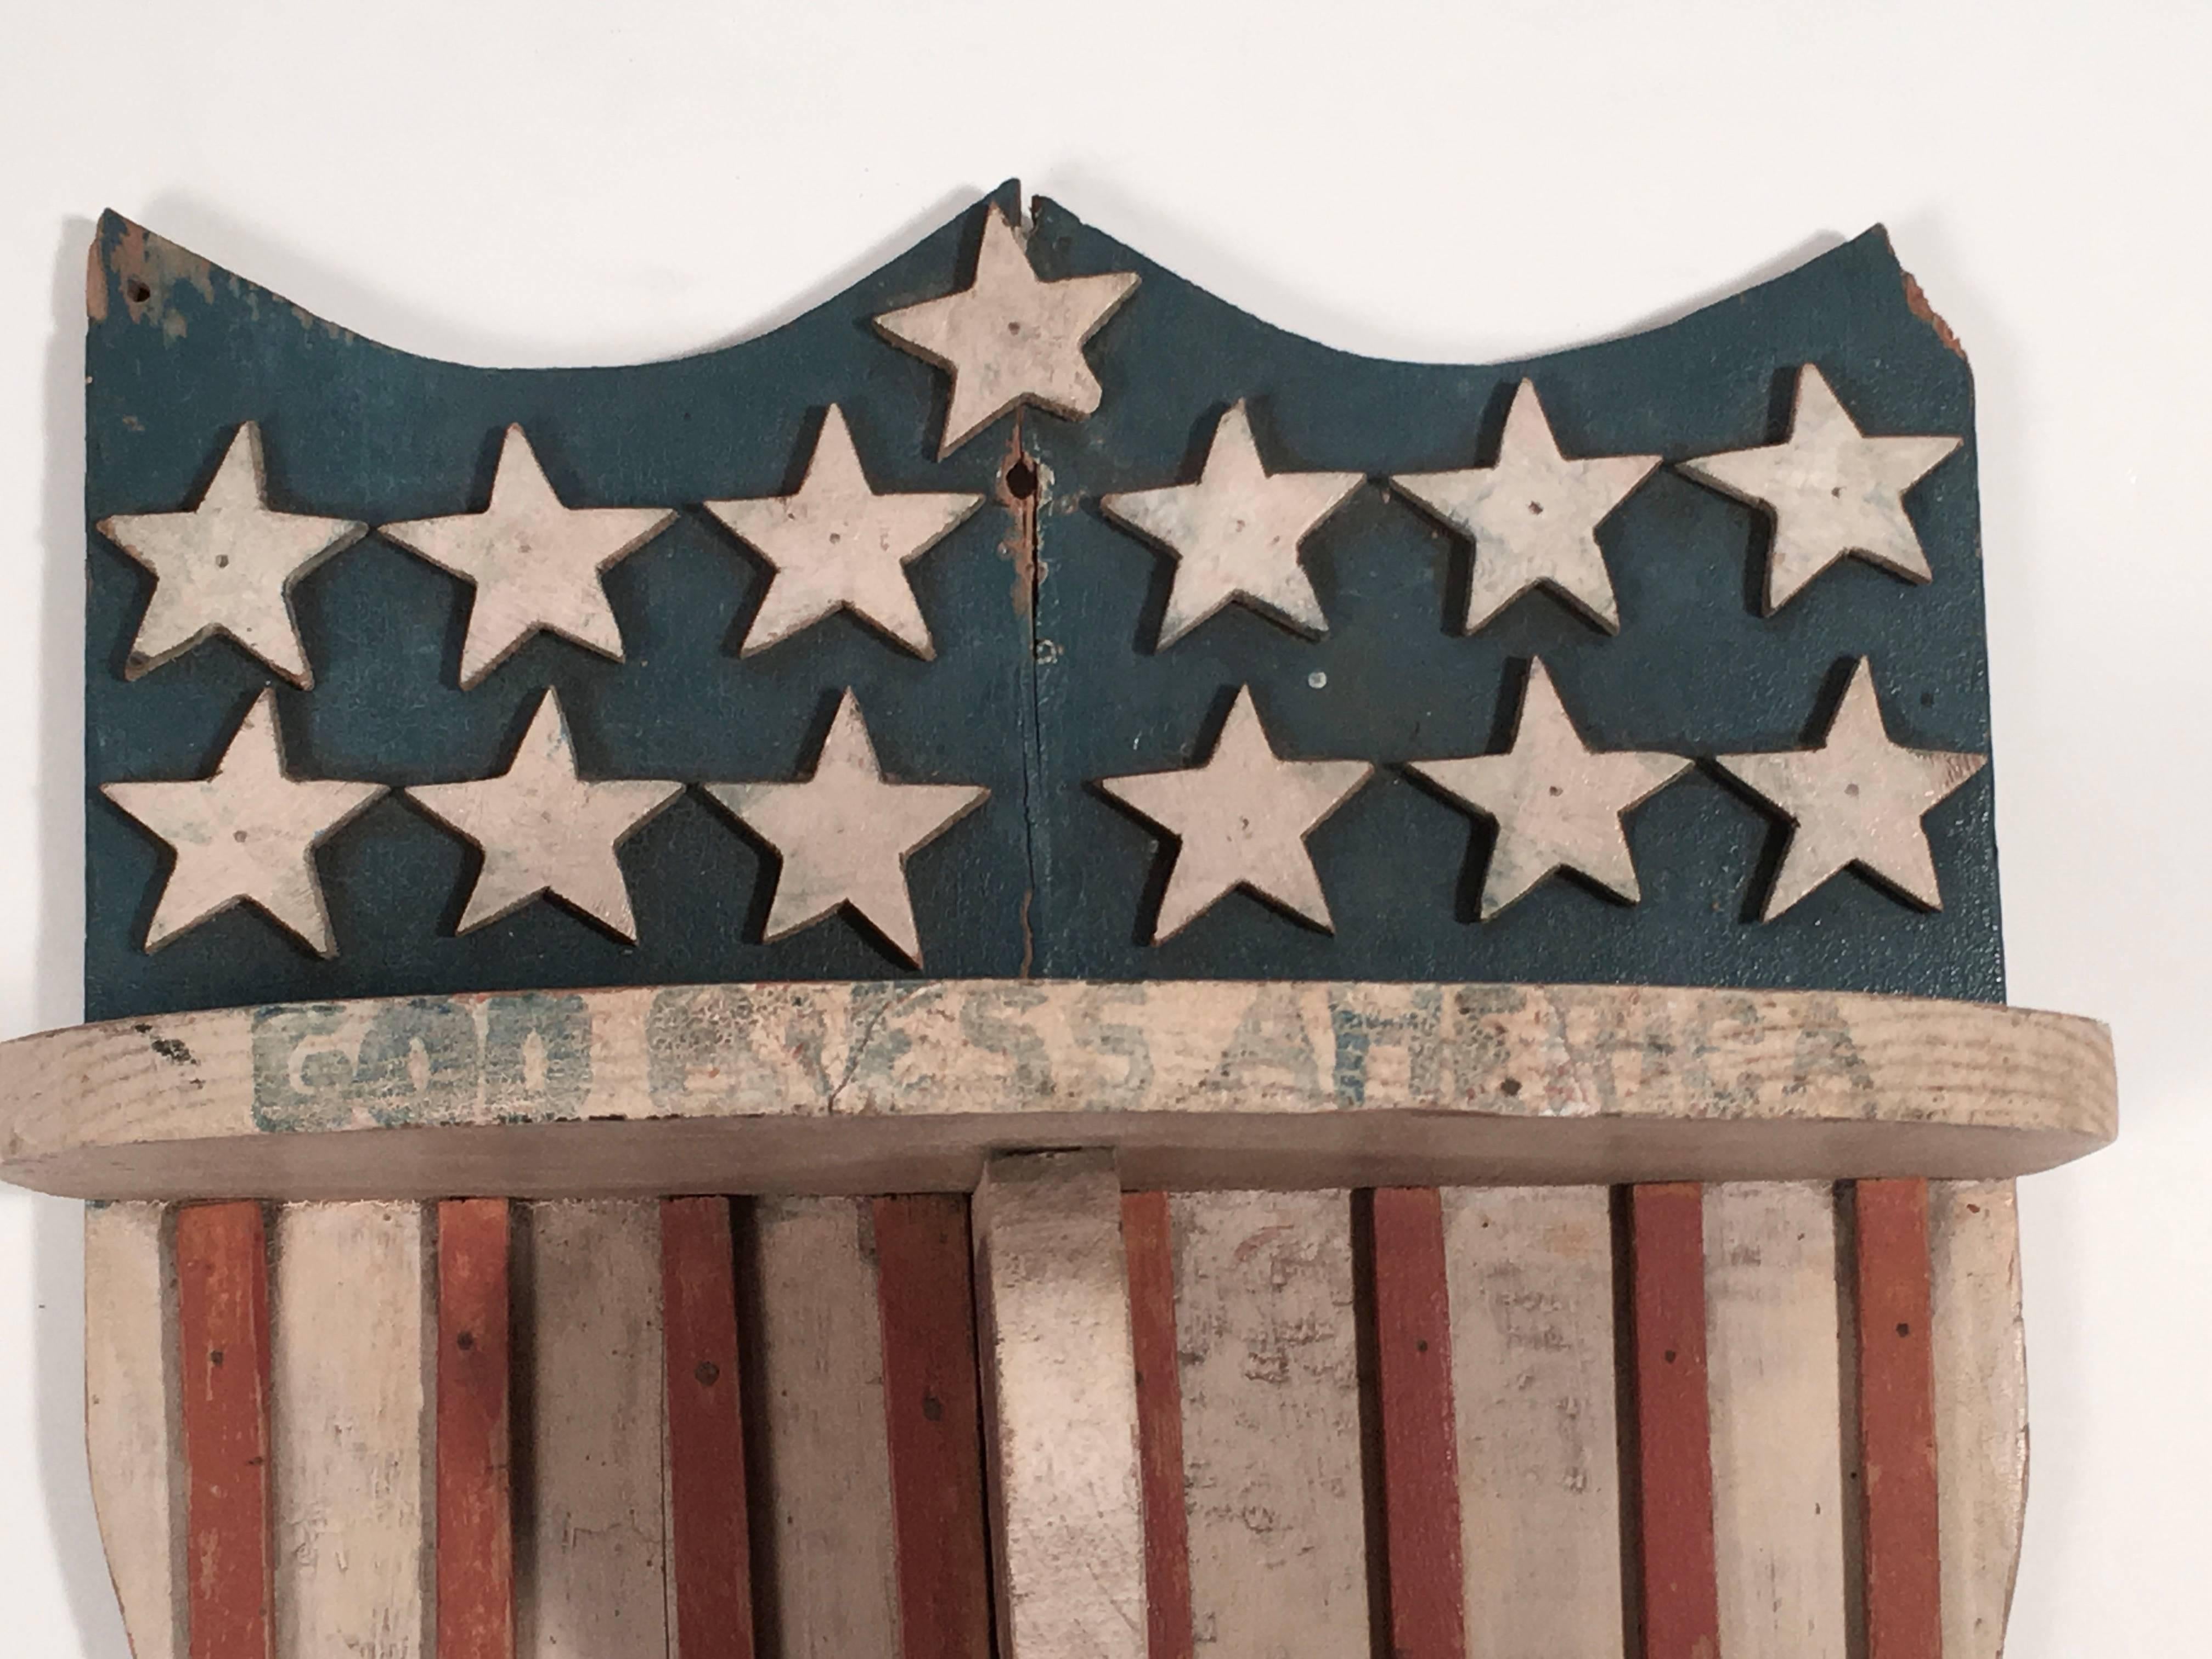 Folk Art Patriotic Stars and Stripes Wall Shelf, circa 1900